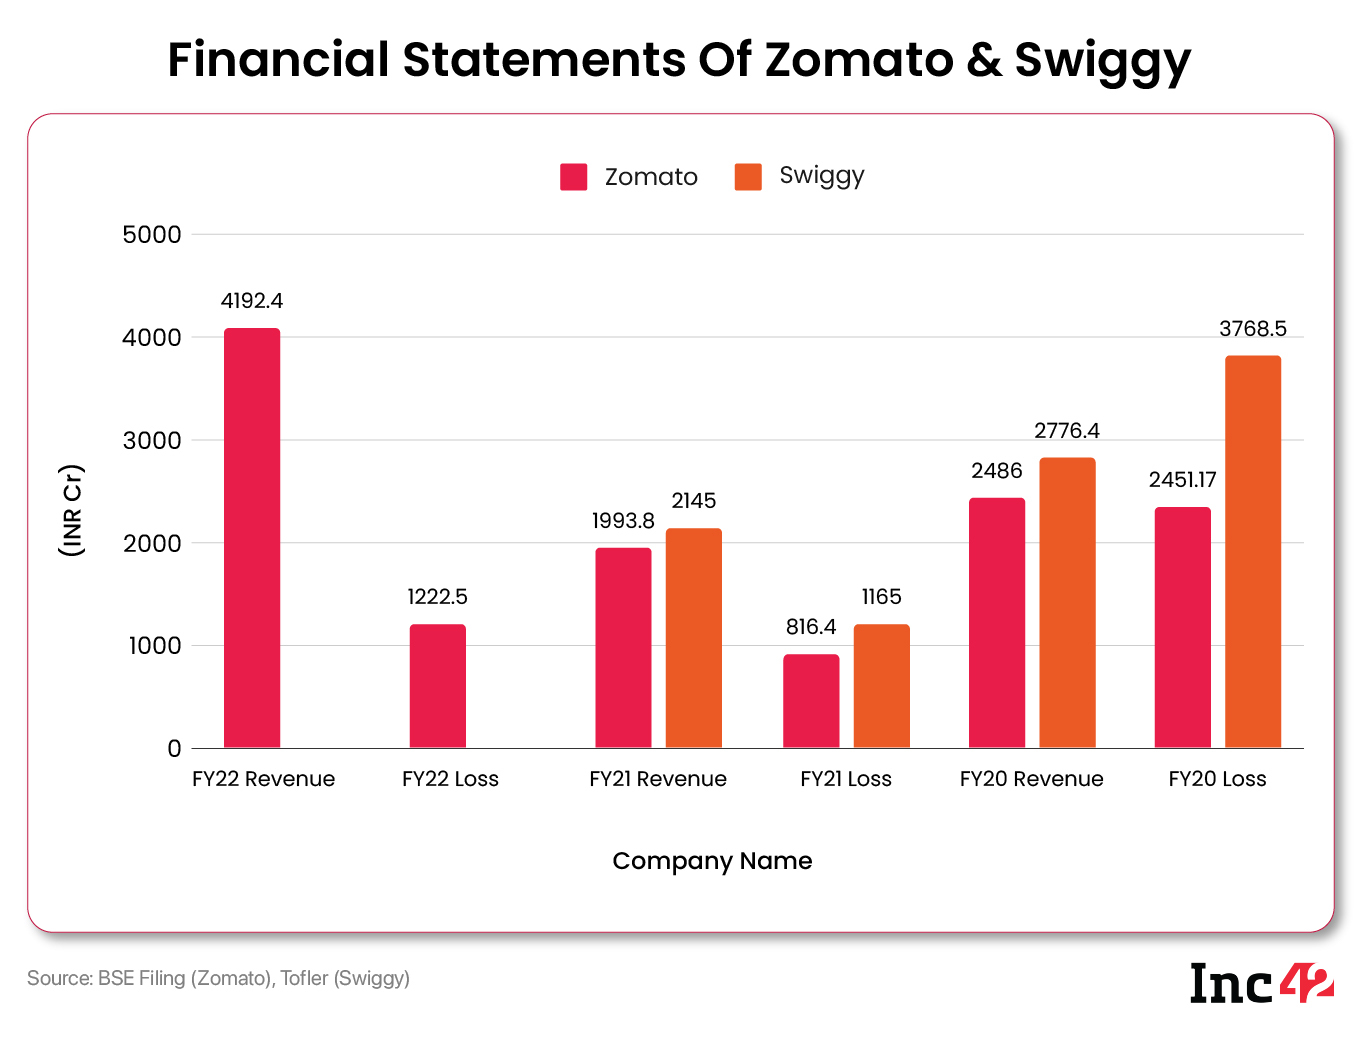 Financial statements of Zomato and Swiggy